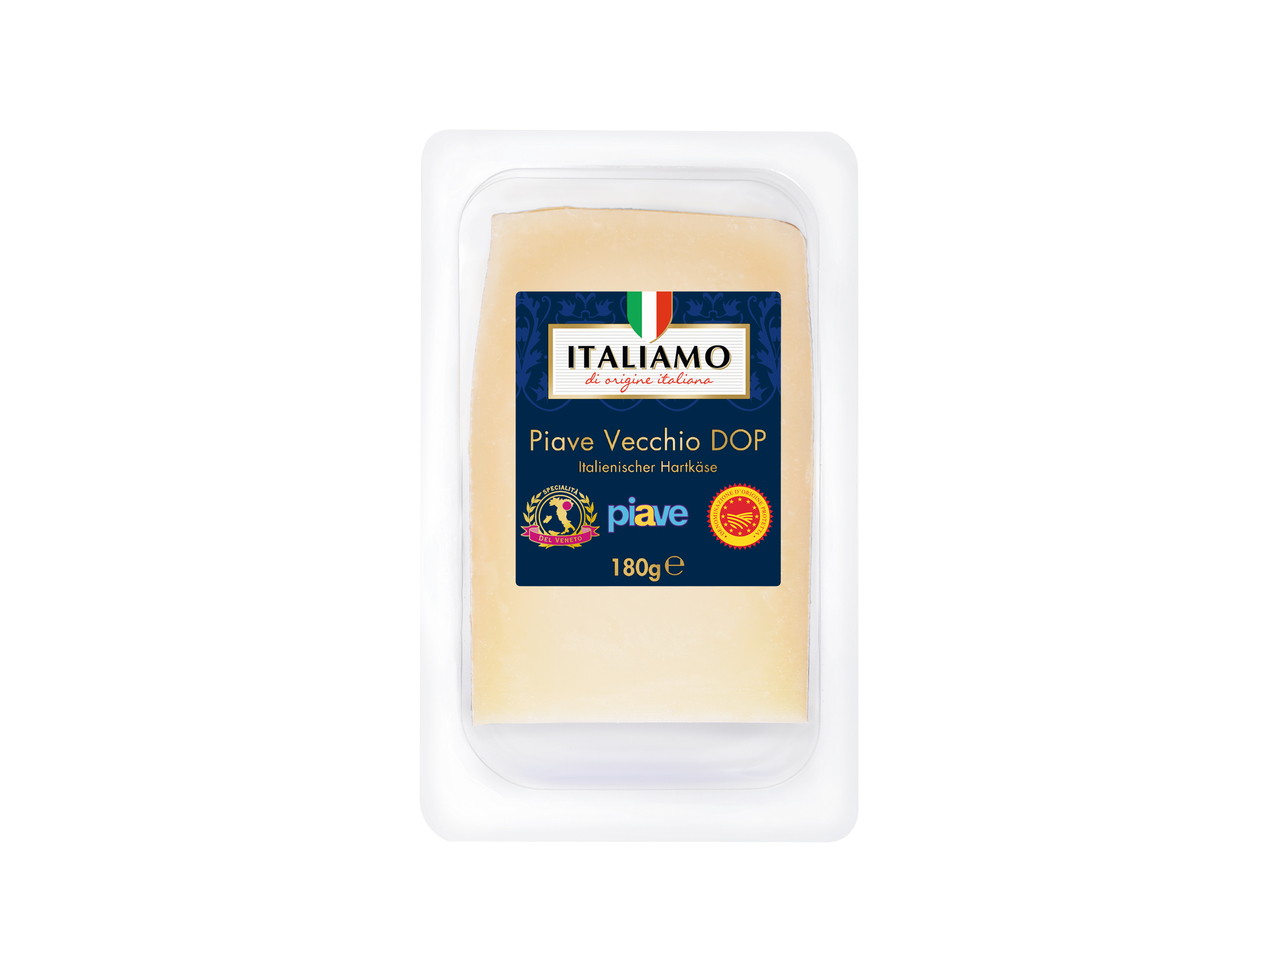 Italienske ostespecialiteter